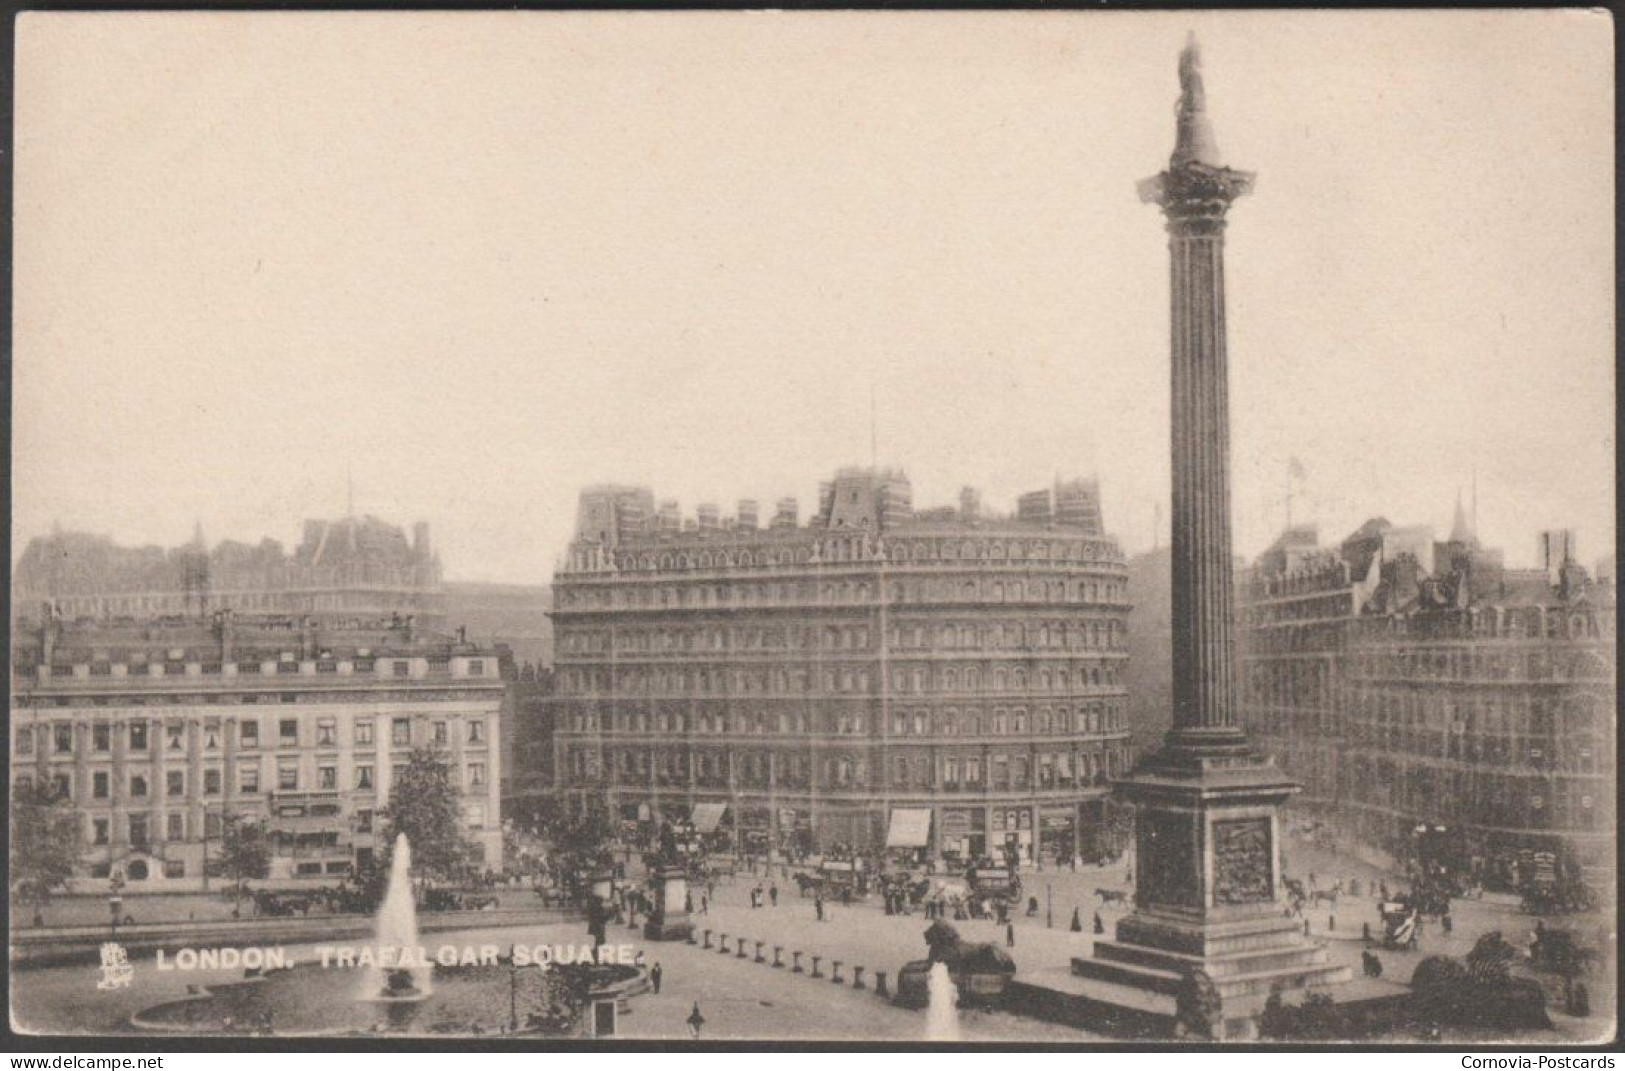 Trafalgar Square, London, C.1905-10 - Tuck's Postcard - Trafalgar Square